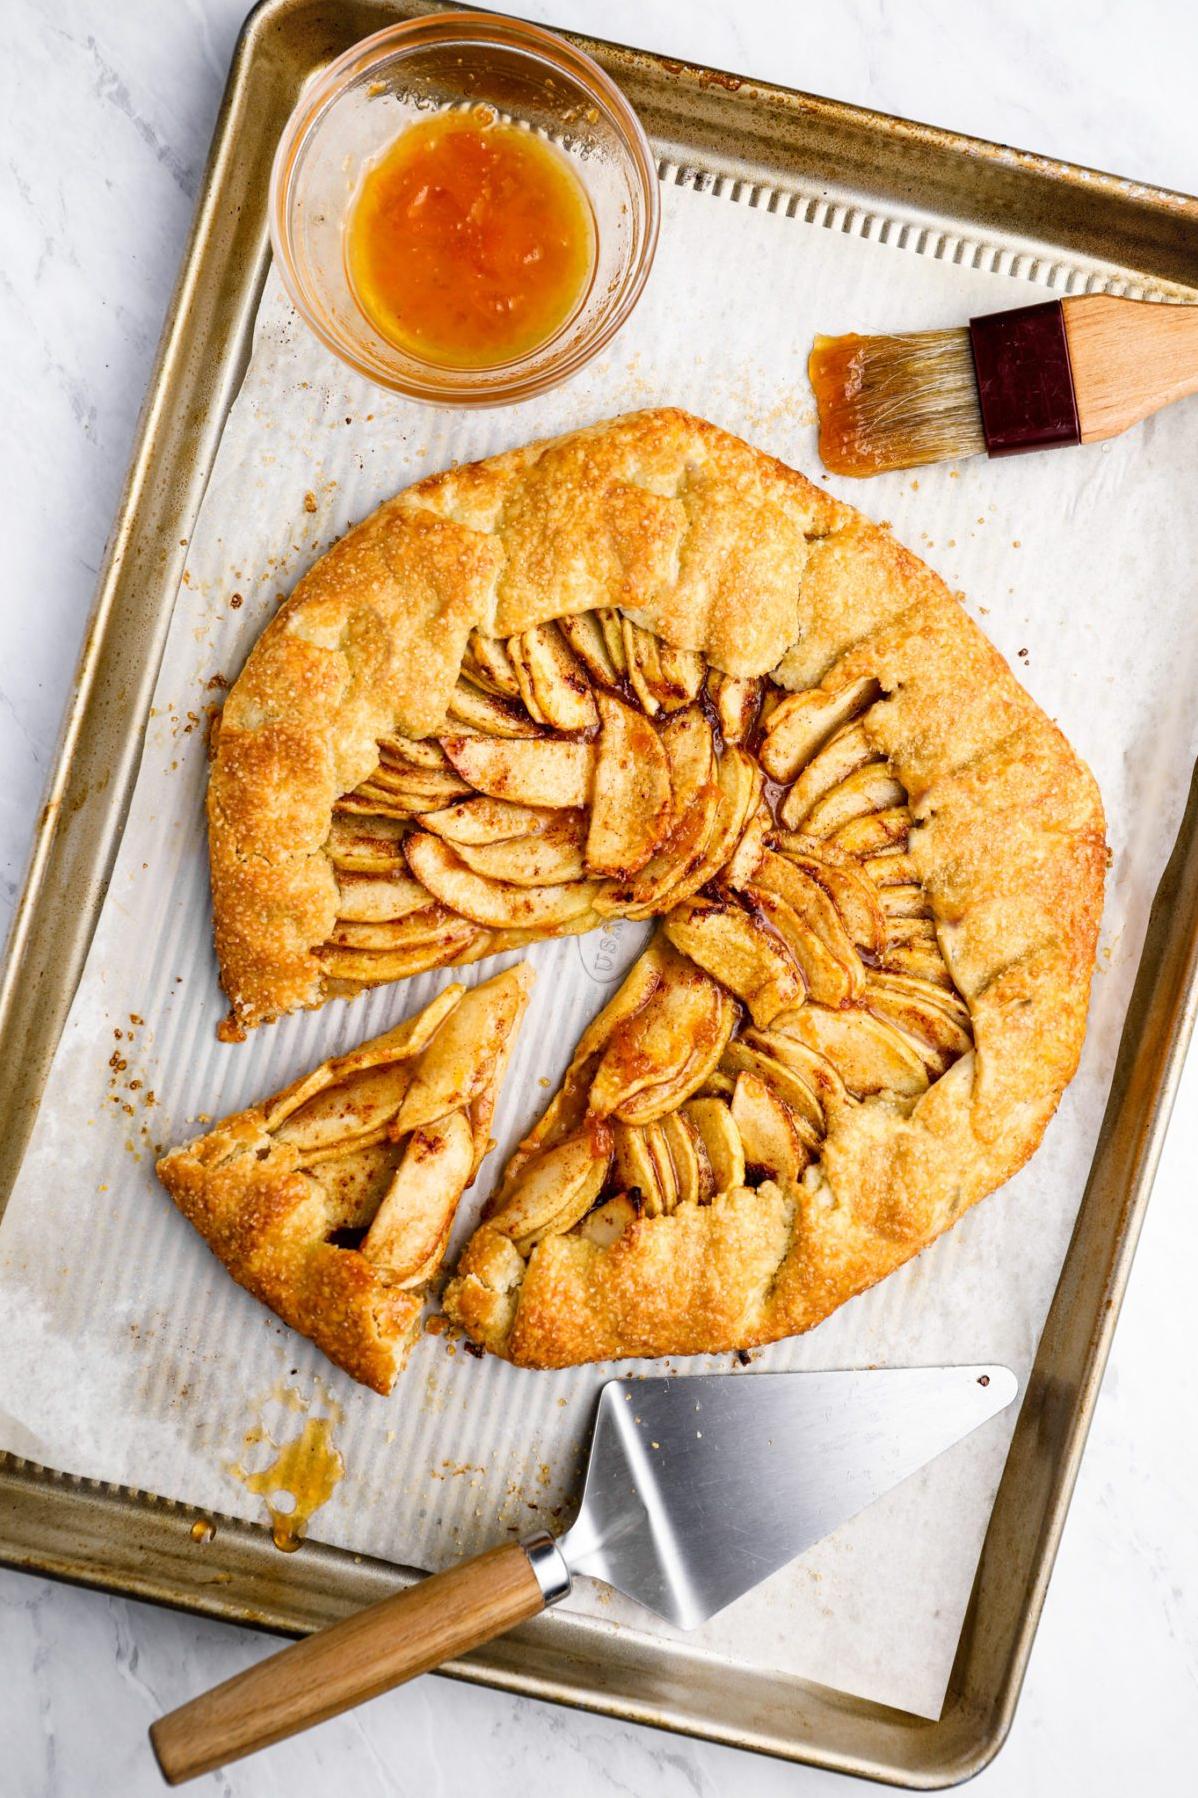  Meet my all-time favorite gluten-free apple tart!